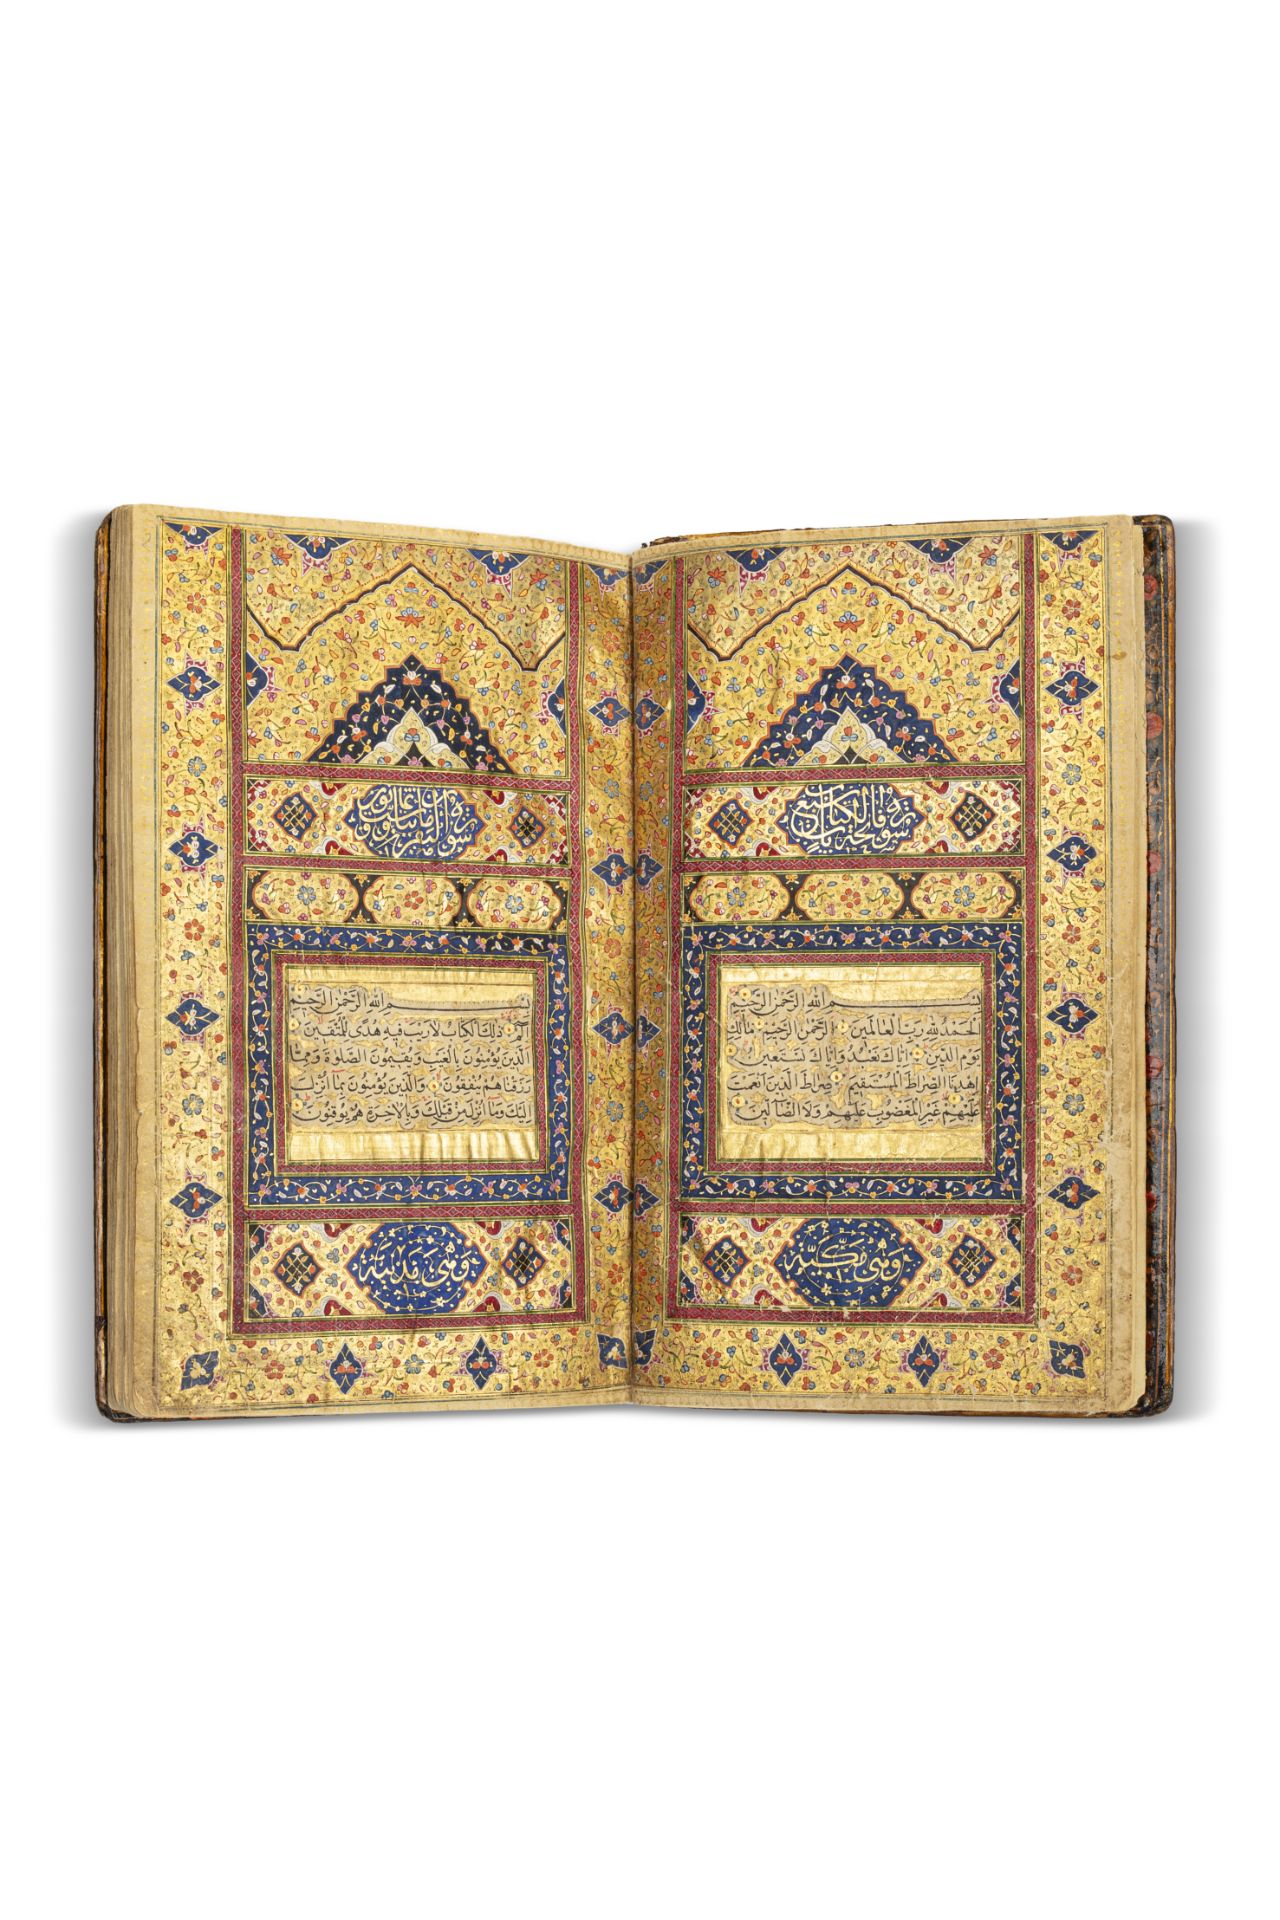 Coran Zand - Reliure signée Muhamad 'Ali Ashraf datée 1157H. (=1744) - Manuscrit [...]